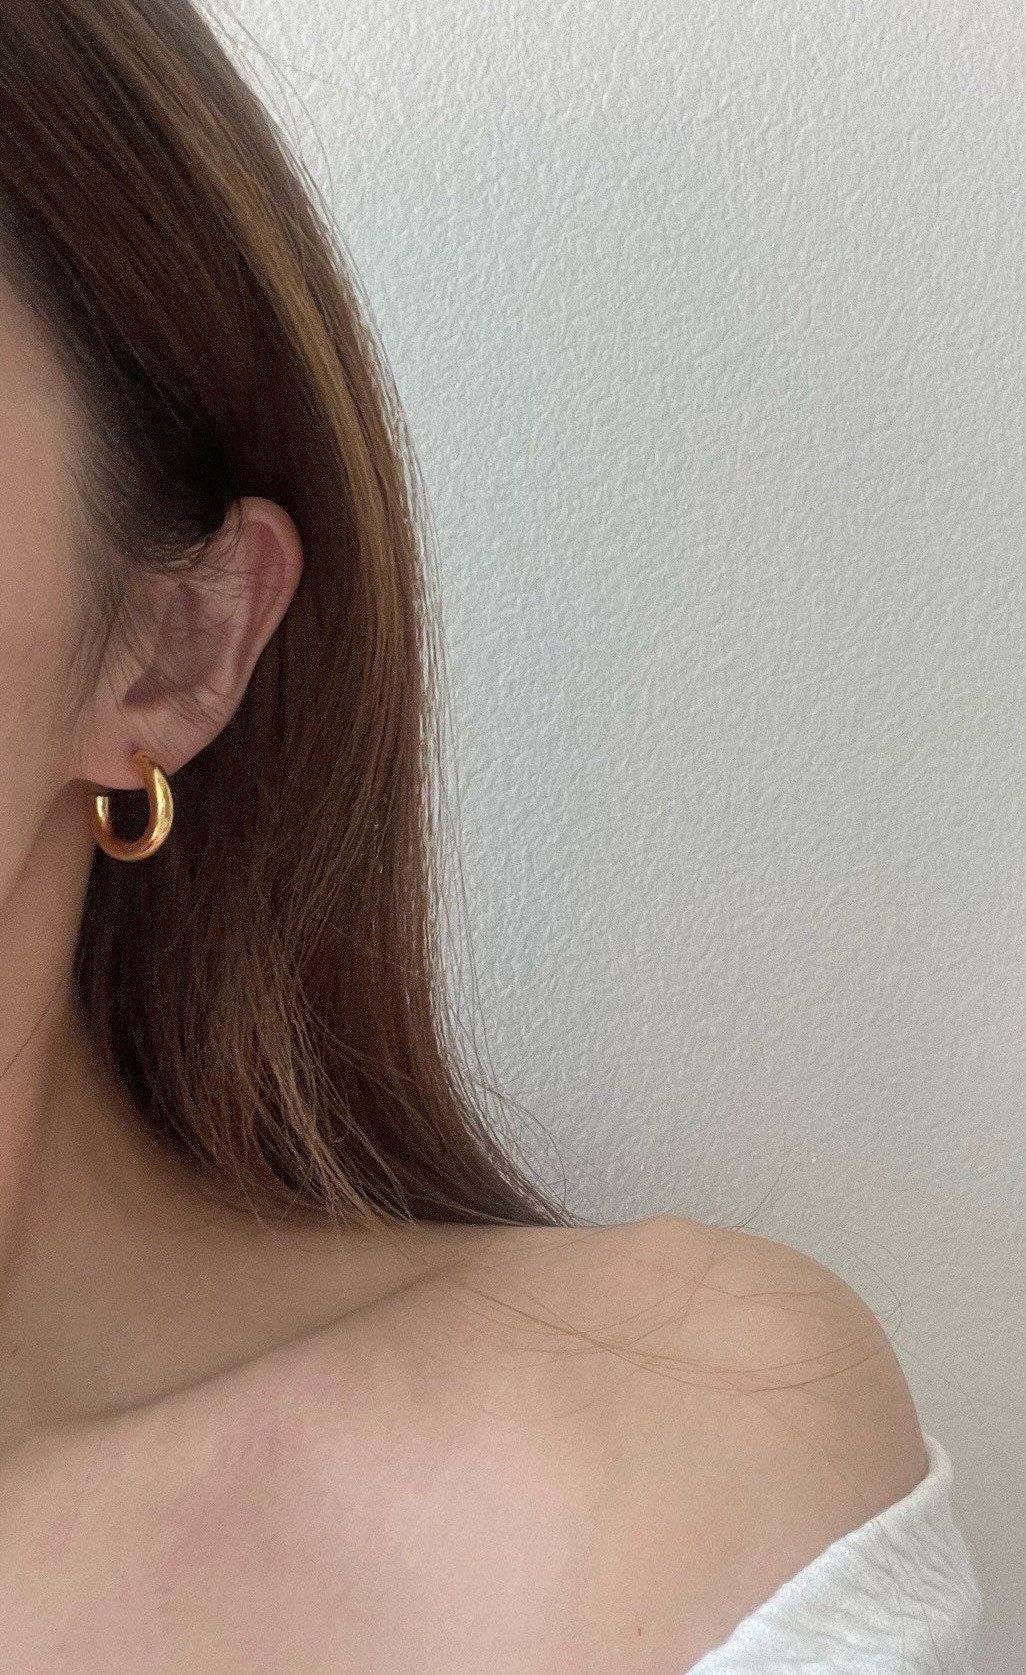 Wear eye-catching and beautiful gold earring studs